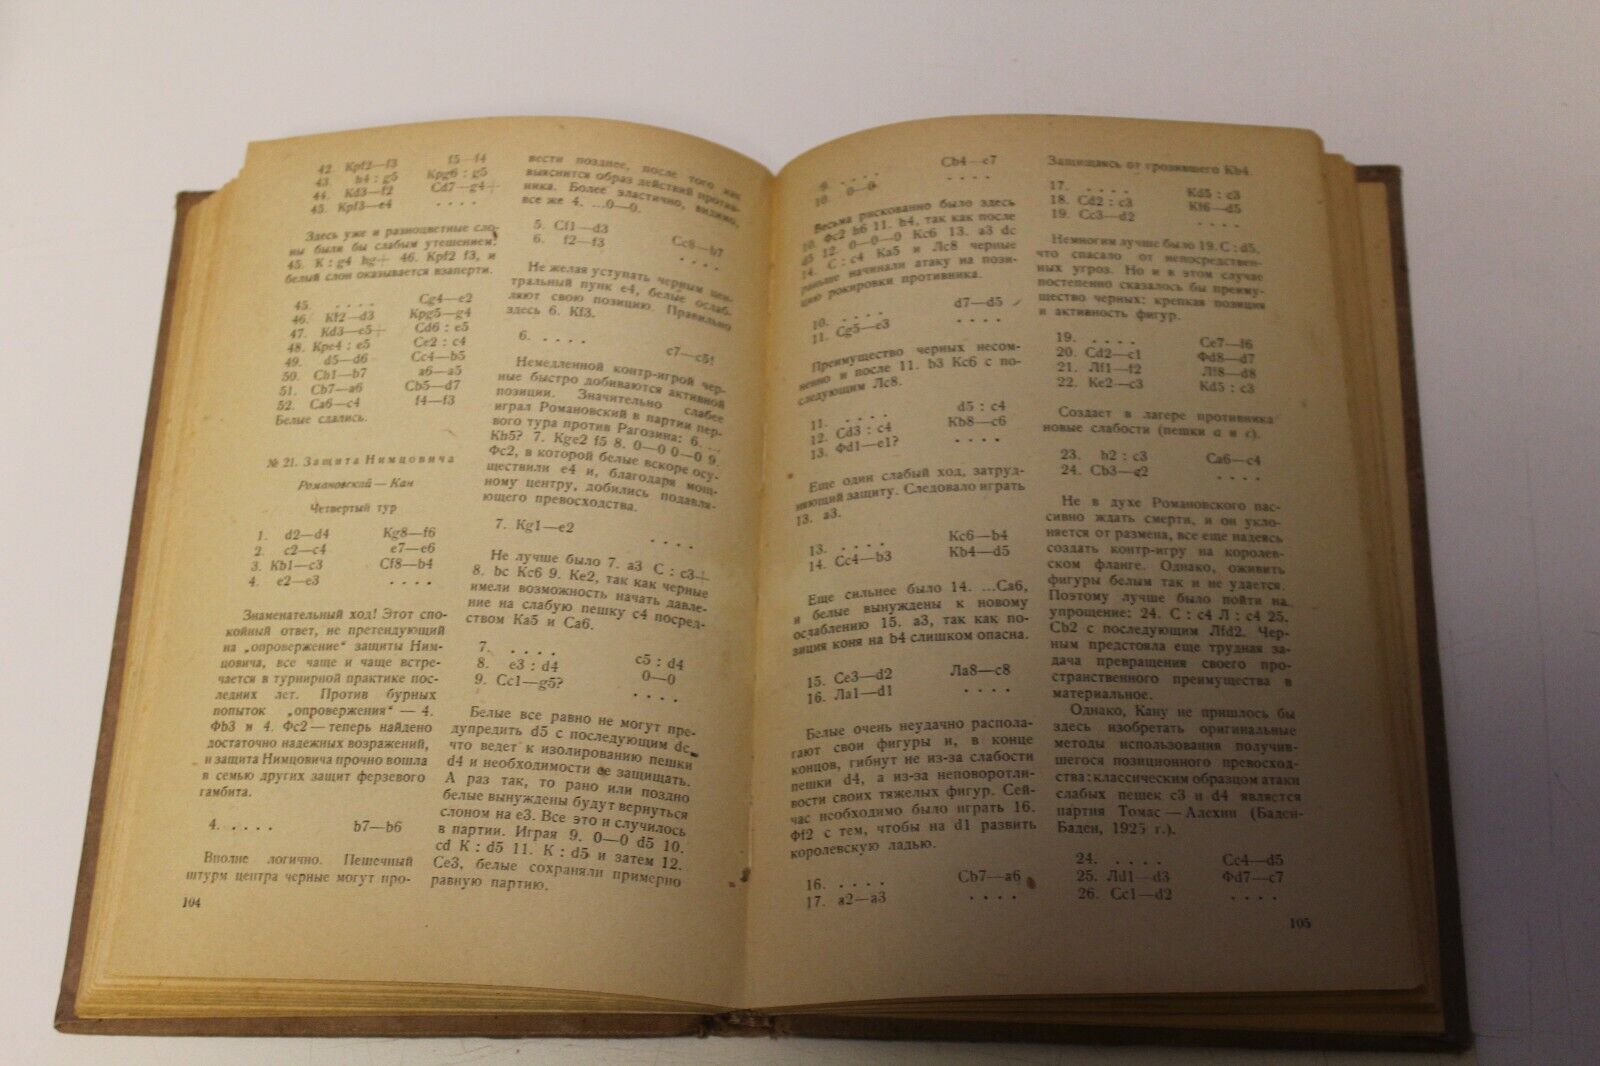 11508.Russian chess book: Botvinnik.1939 11 all-Union chess championship